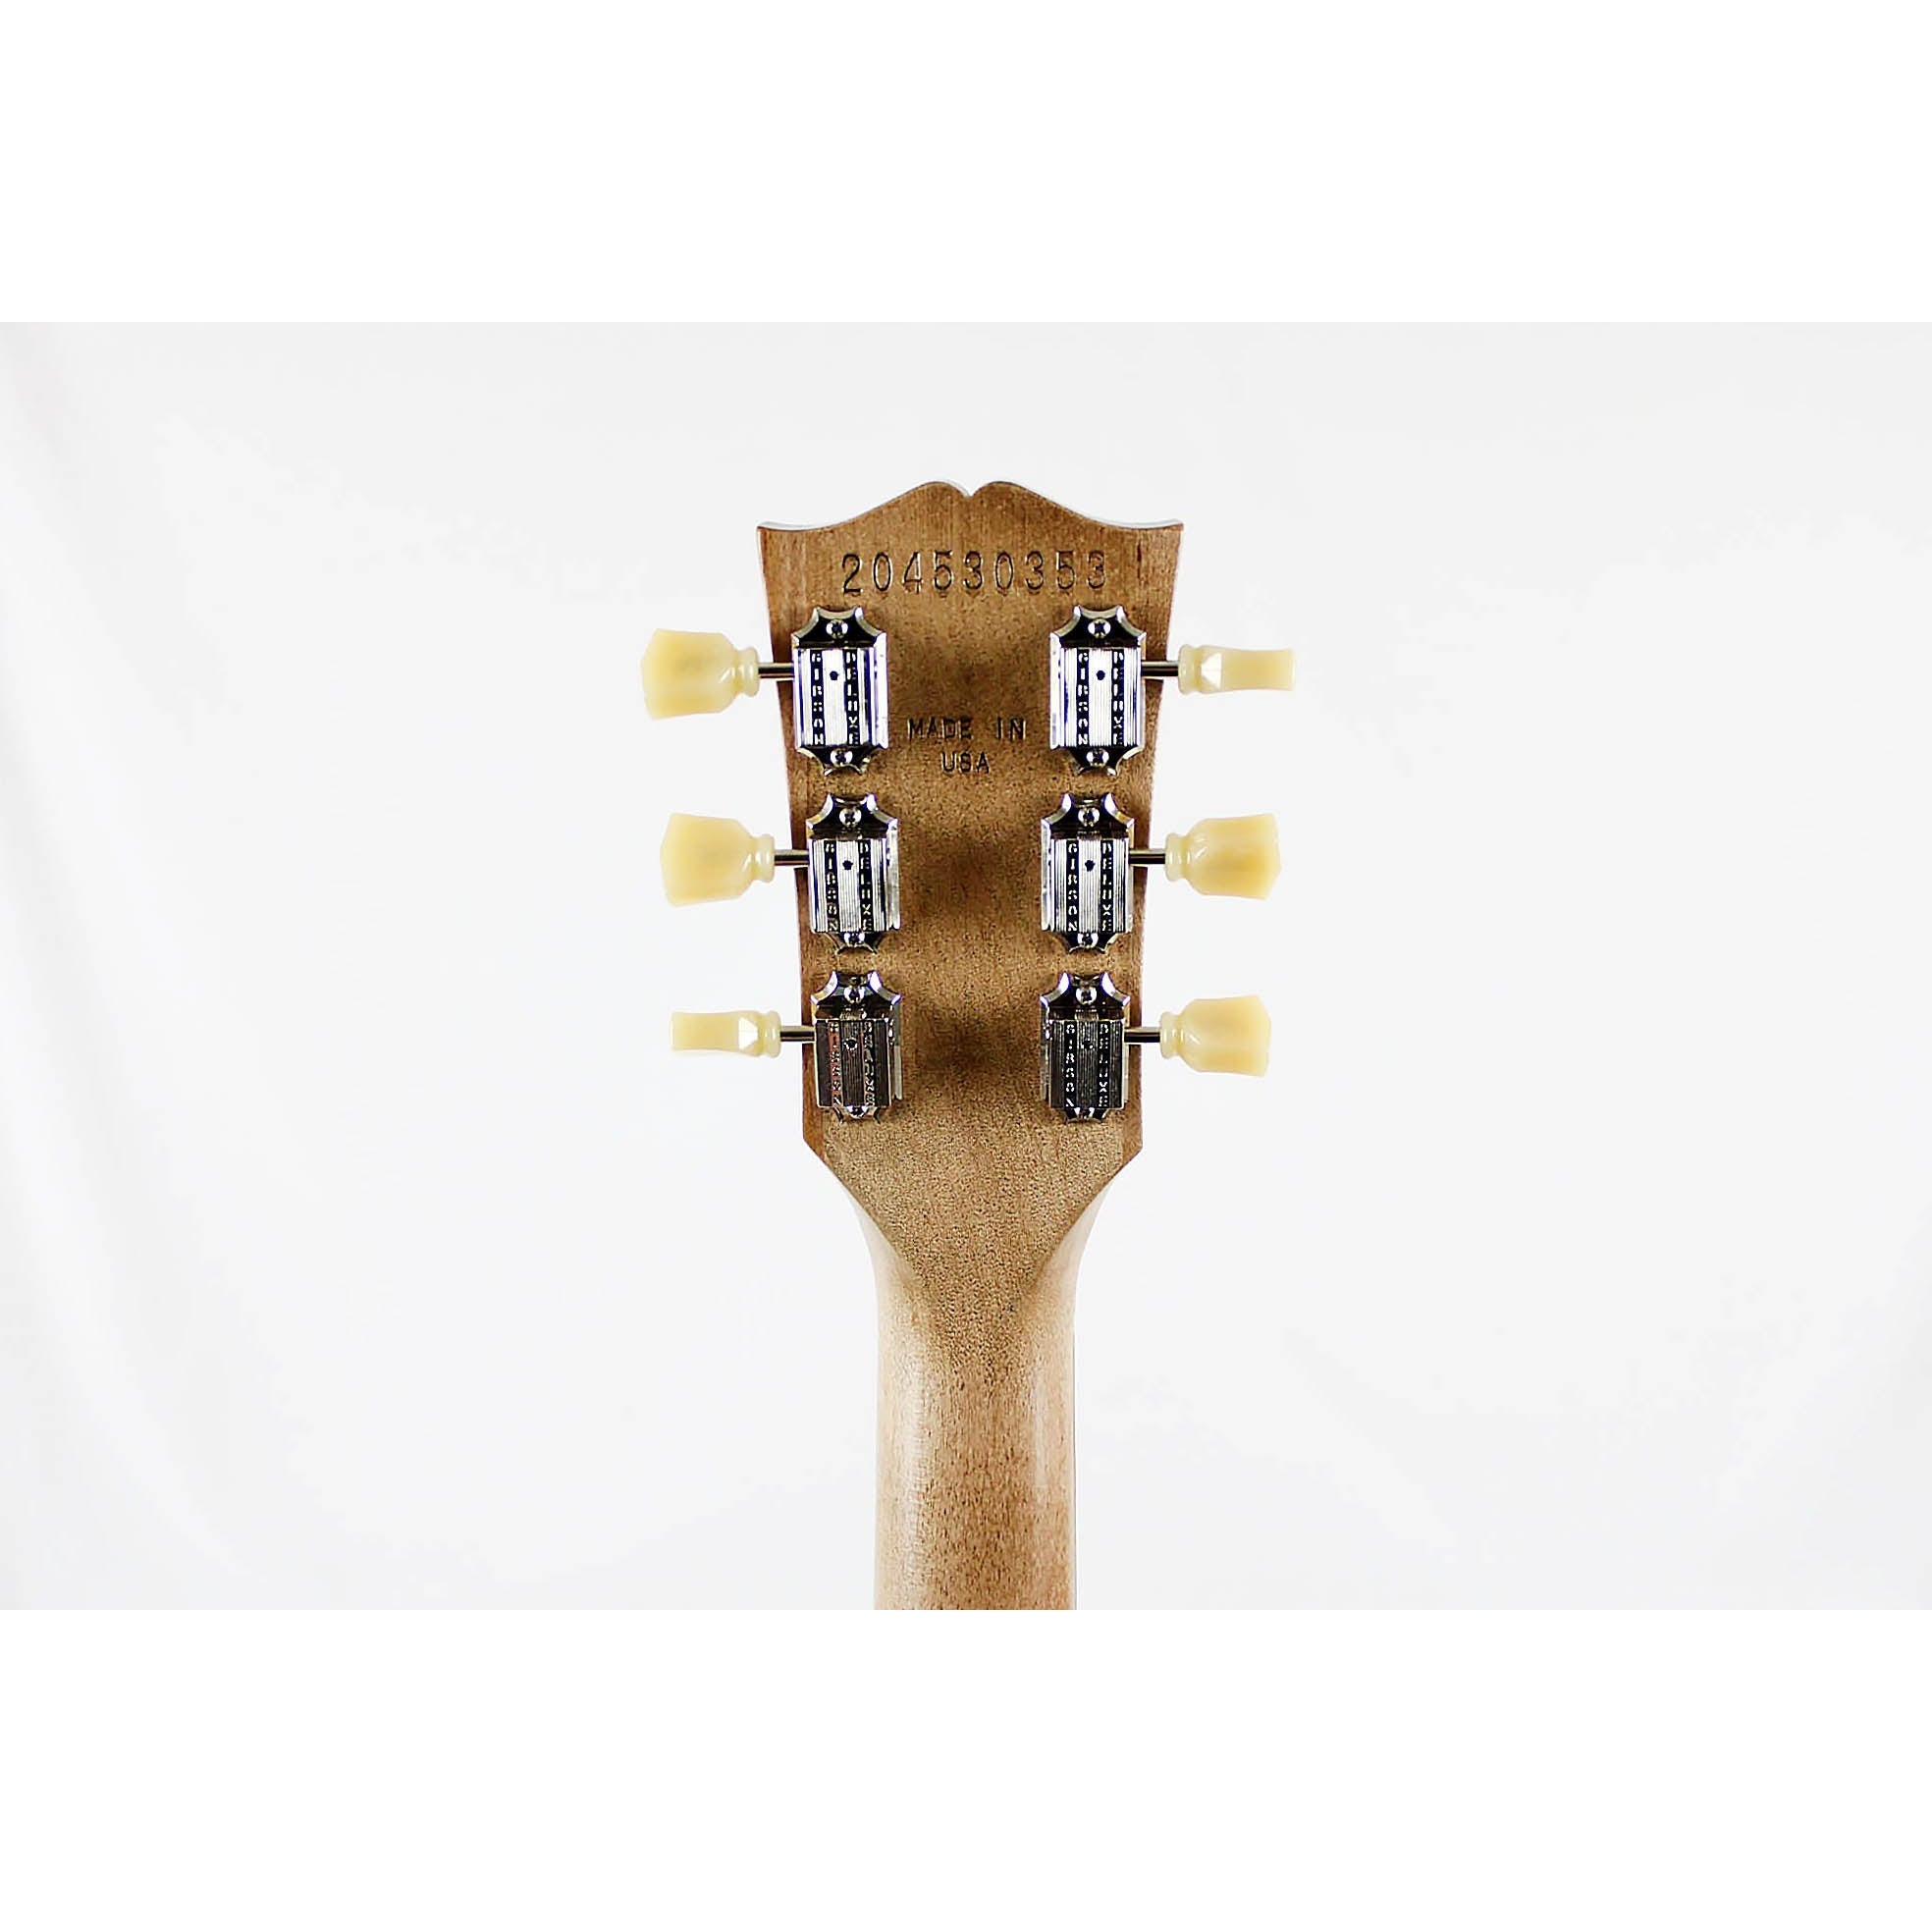 Gibson SG Standard Tribute - Natural Walnut